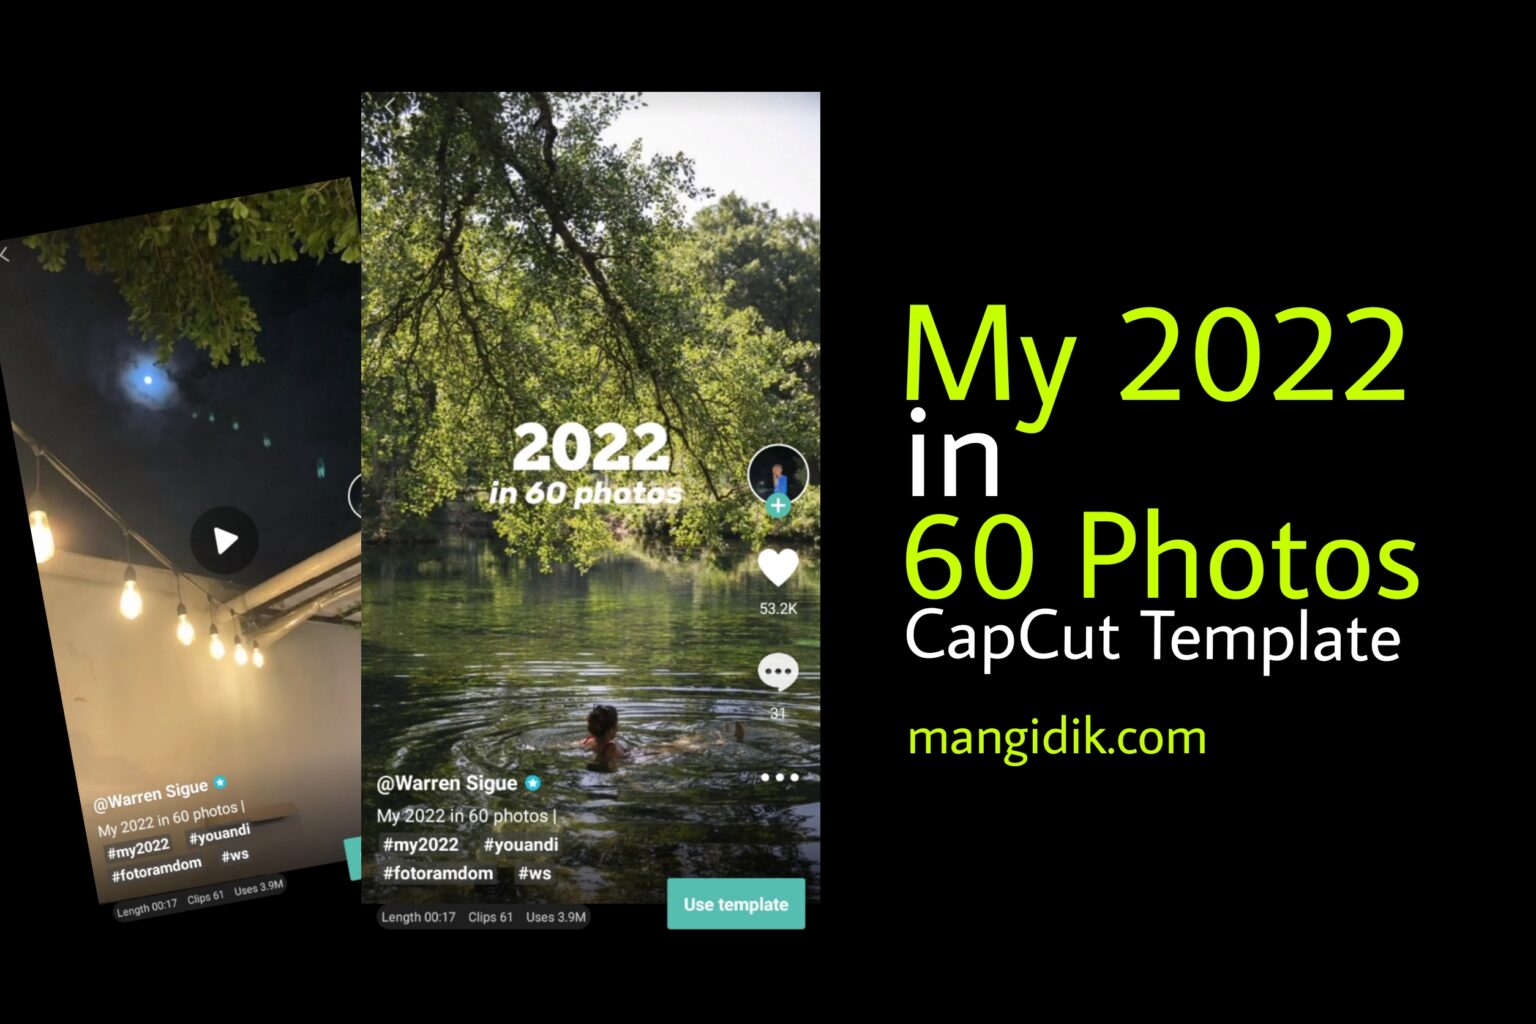 my-2022-in-60-photos-capcut-template-link-new-trend-mang-idik